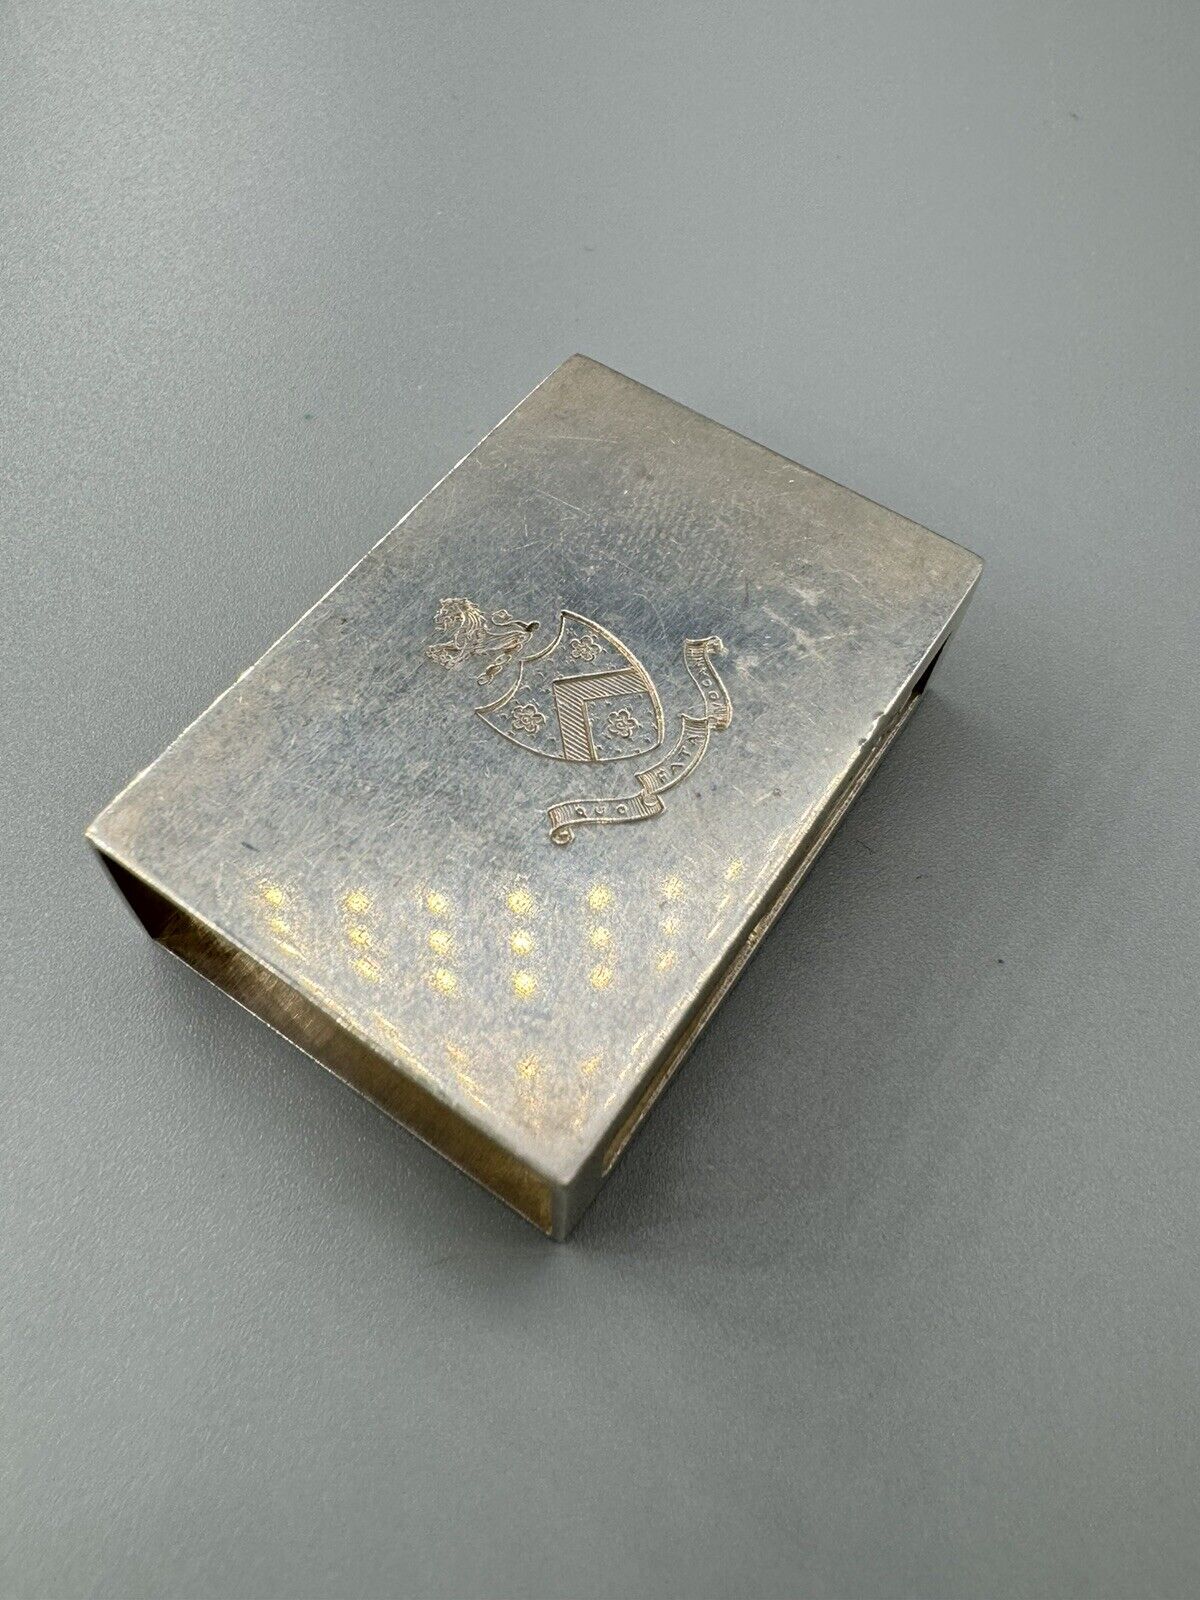 ANTIQUE TIFFANY & CO STERLING SILVER 925 MATCH BOX HOLDER MONOGRAMMED EMBLEM 23g